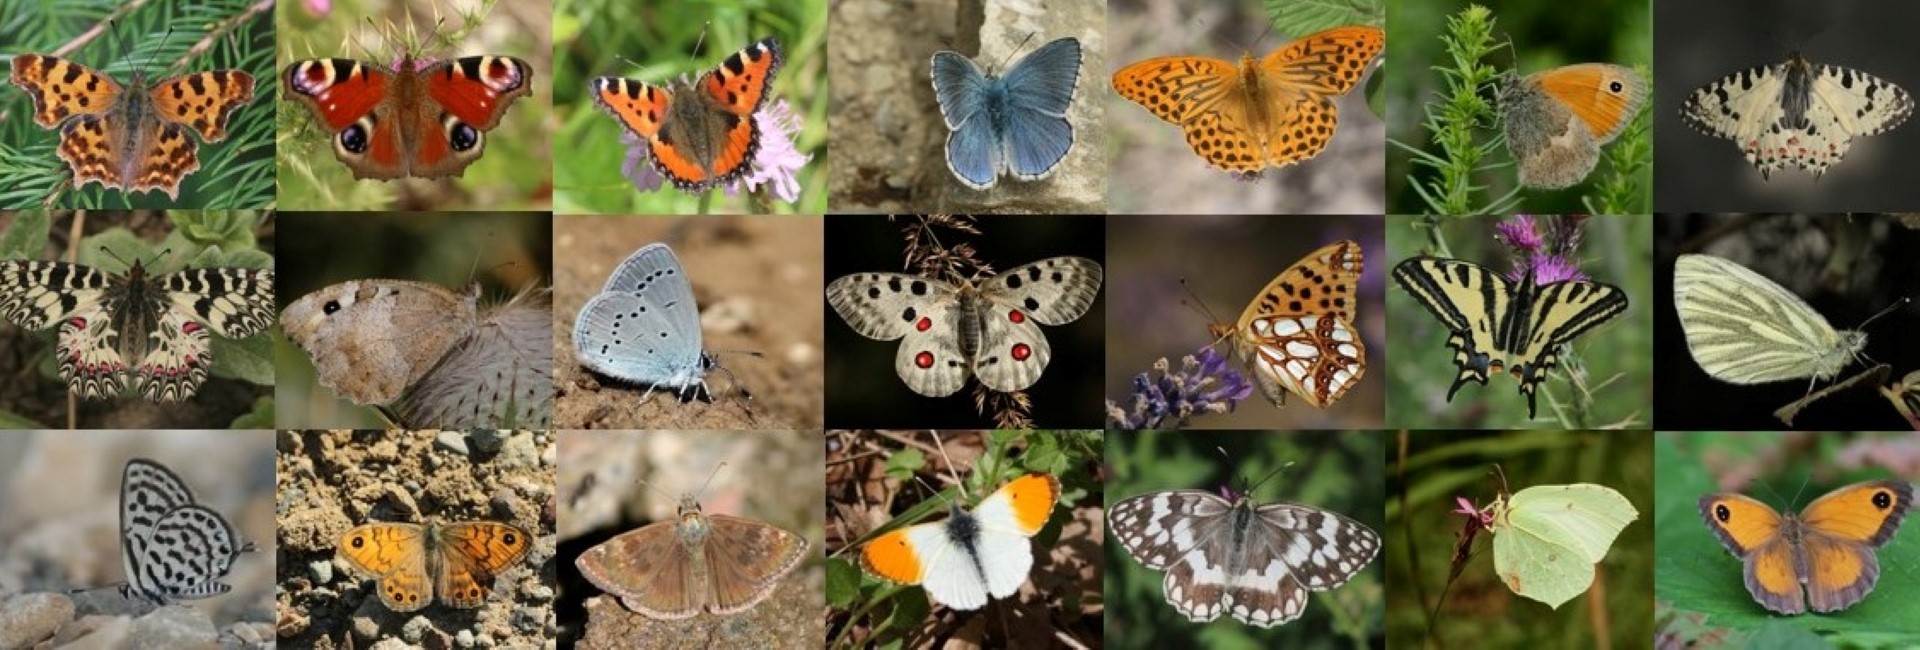 Missing butterflies of Crete - photos © Xristos Dimadis